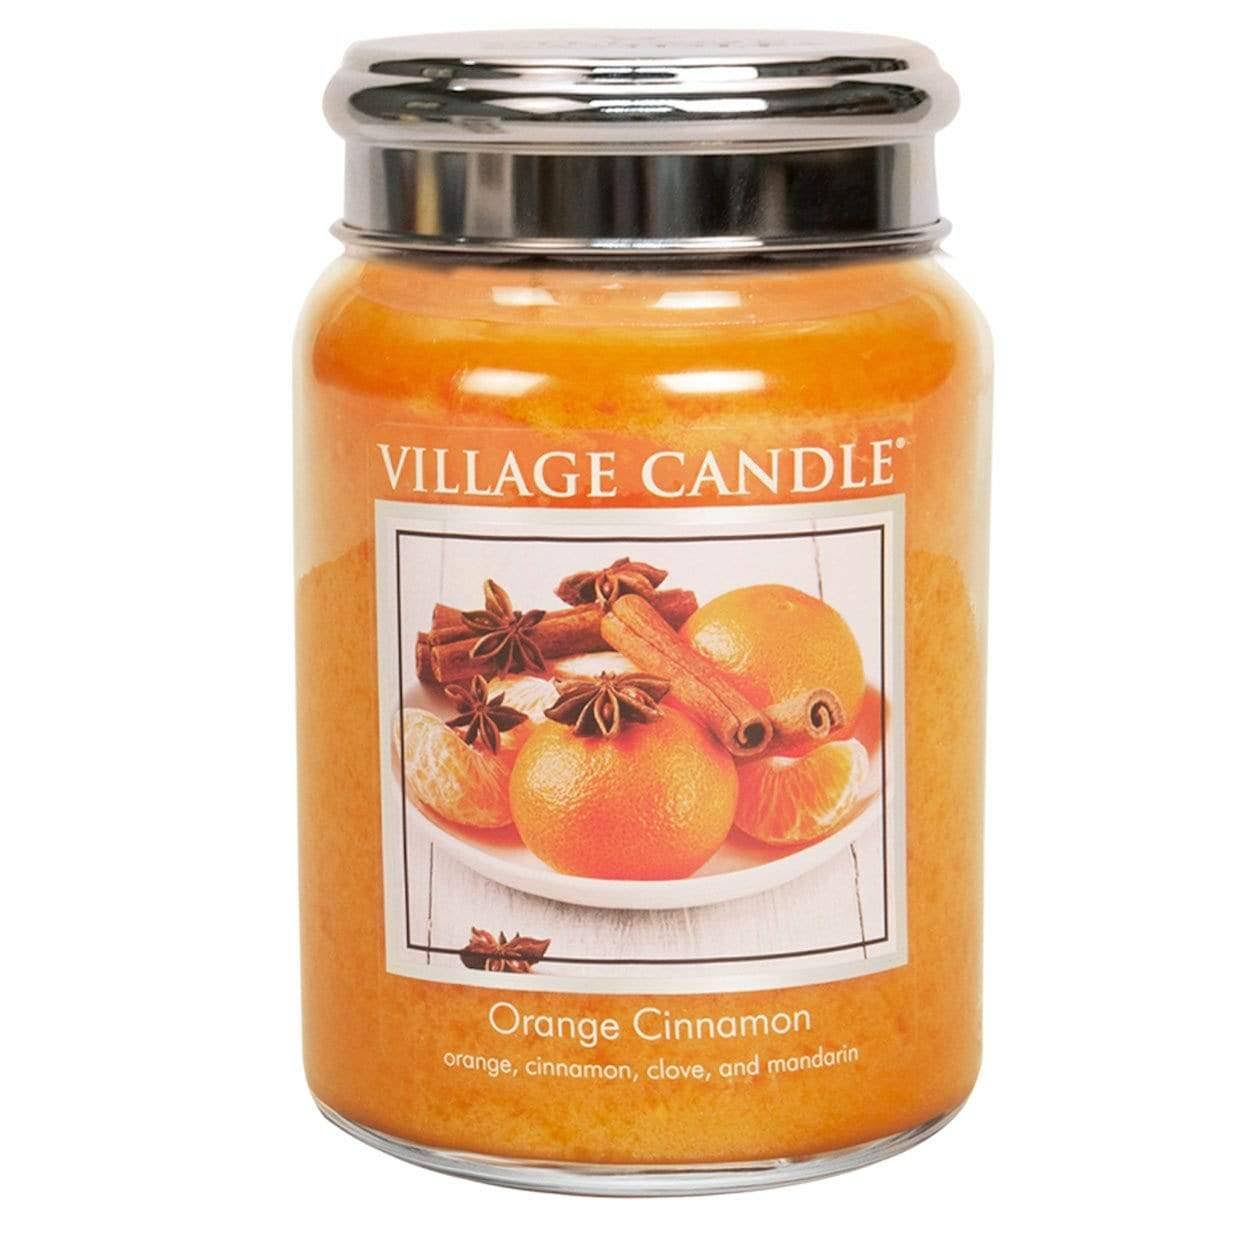 Village Candle Orange Cinnamon Large Jar Candle